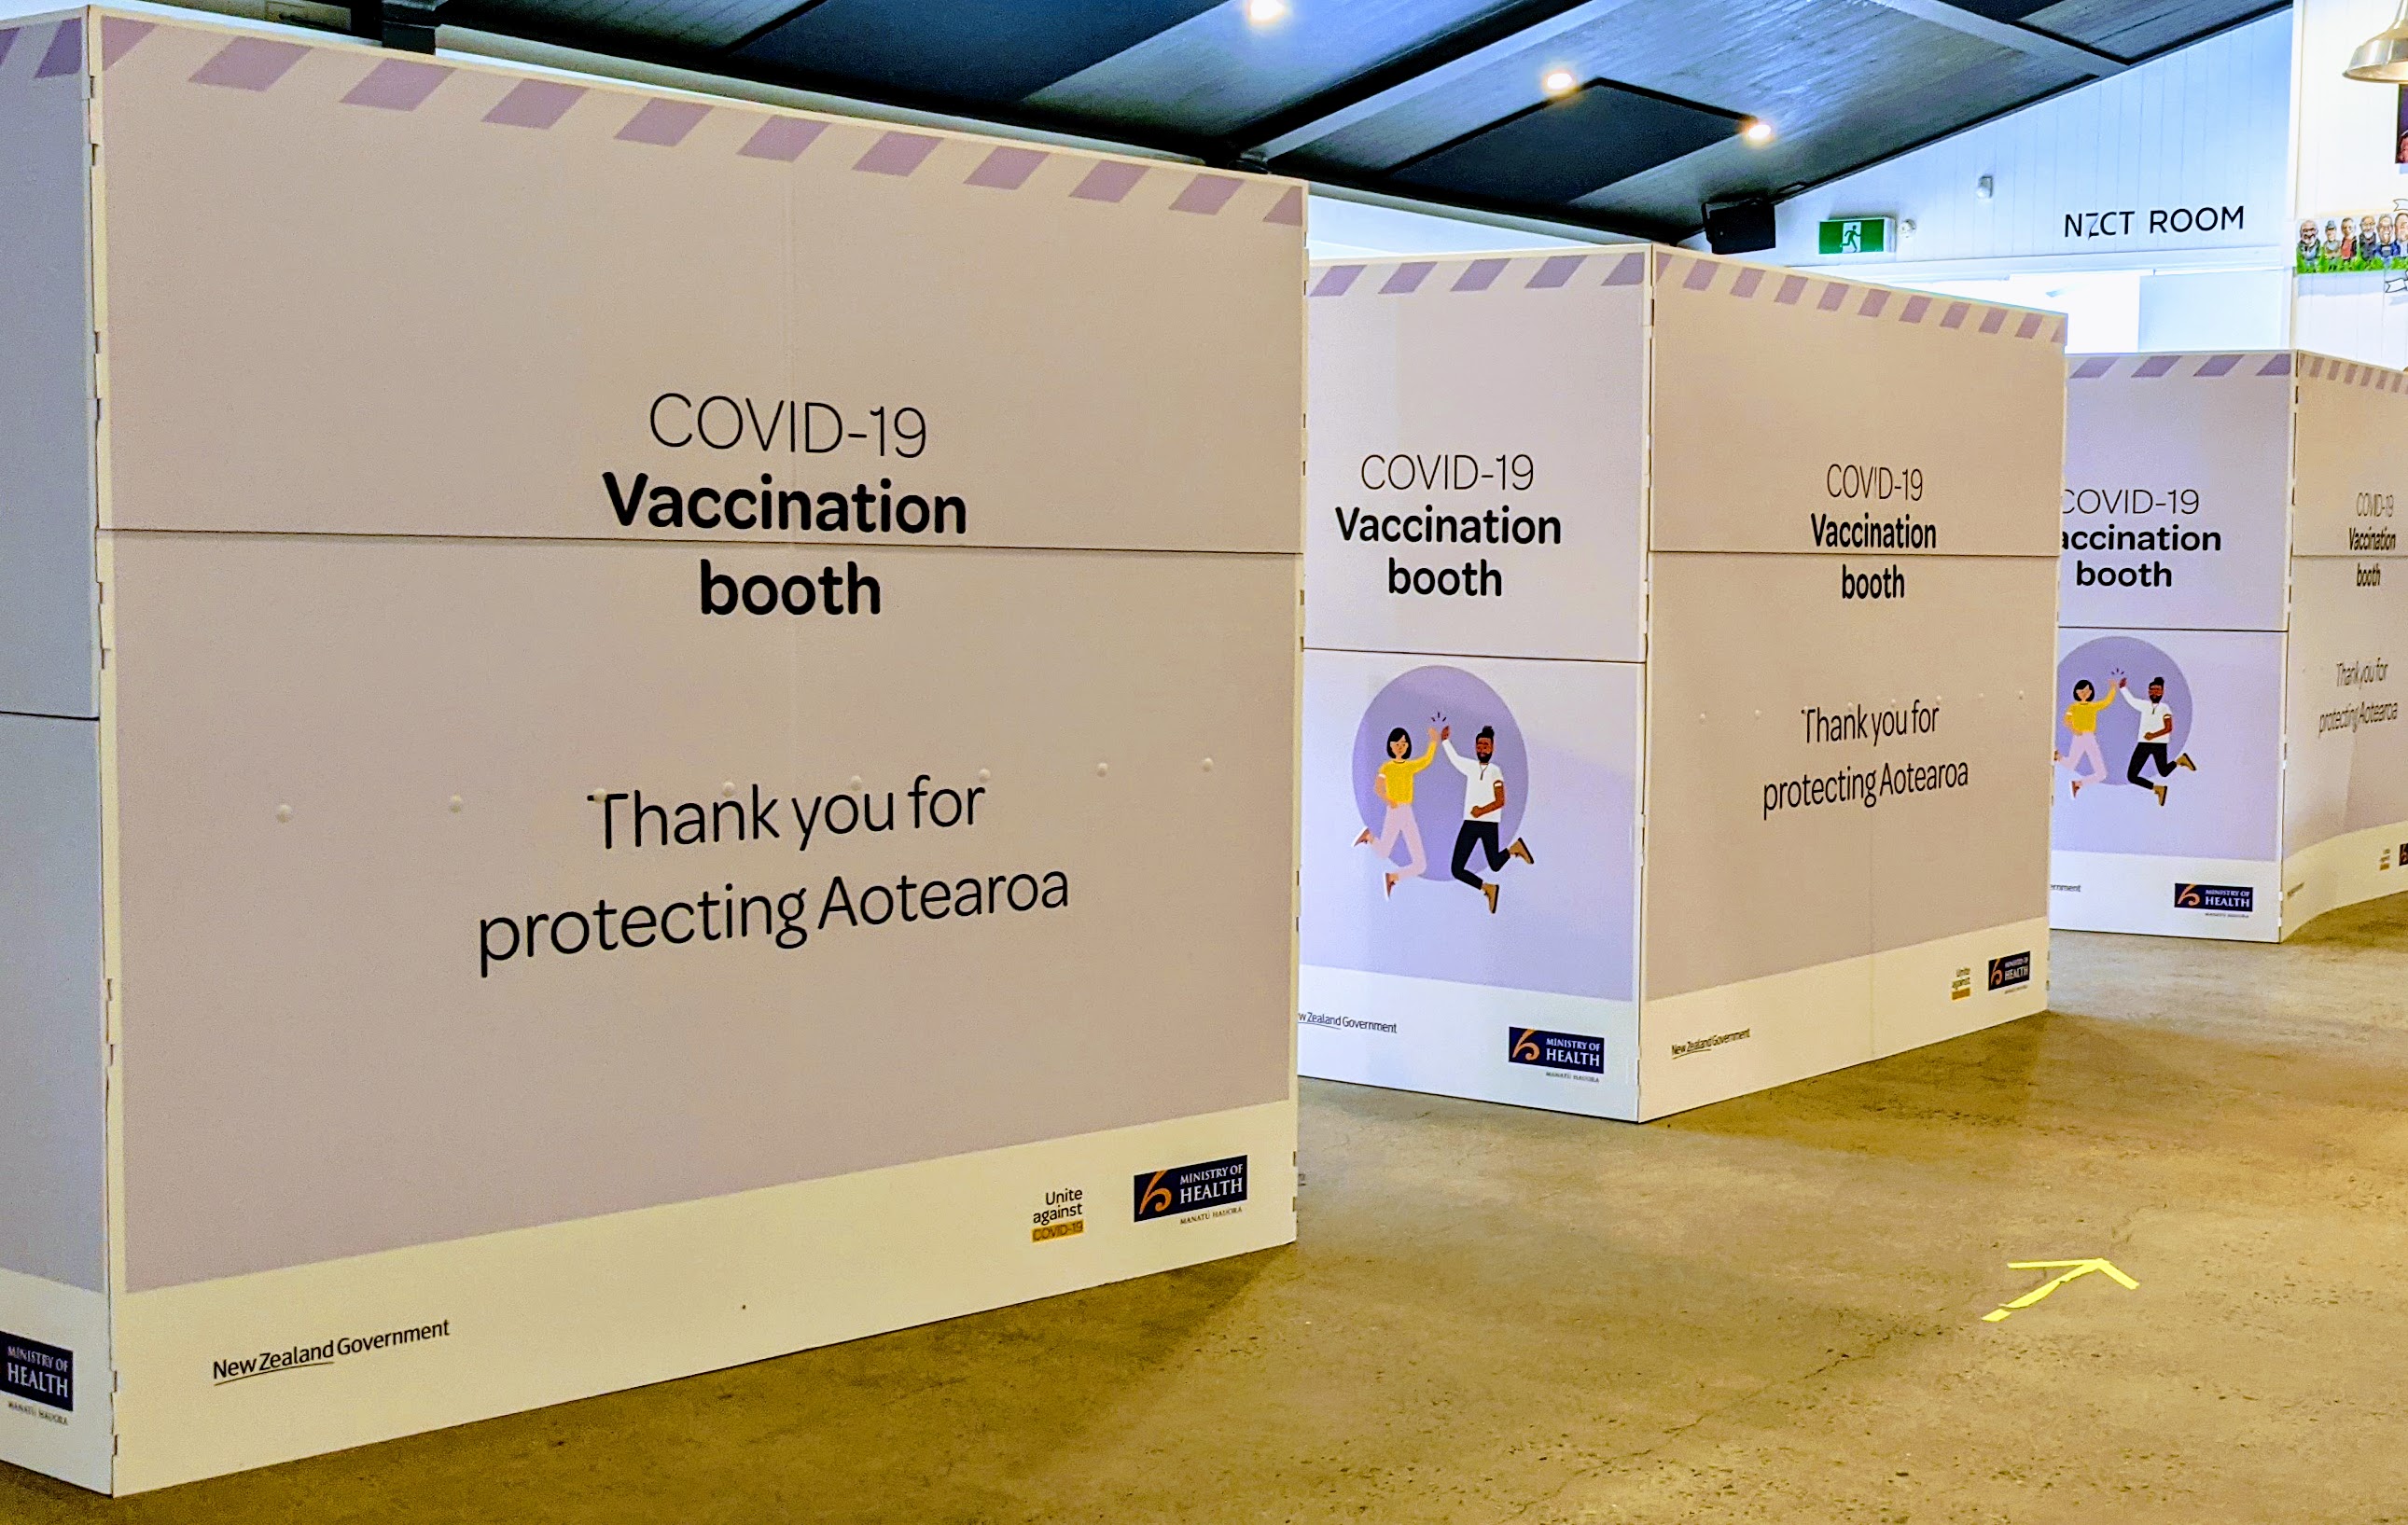 COVID vaccination booths, August 2019 (Kilbirnie, NZ)